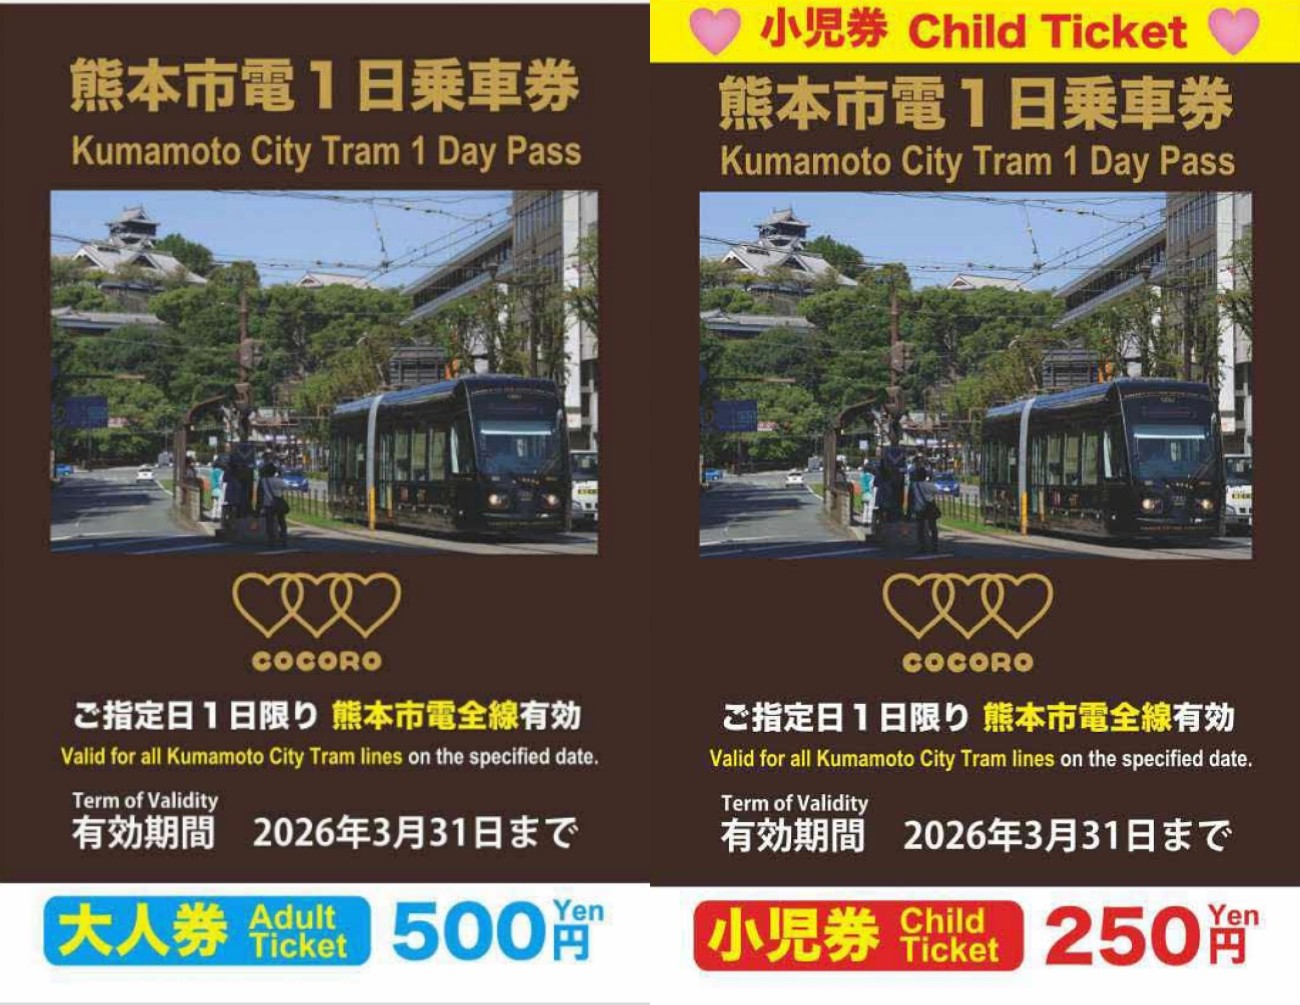 Kumamoto city tram one-day ticket